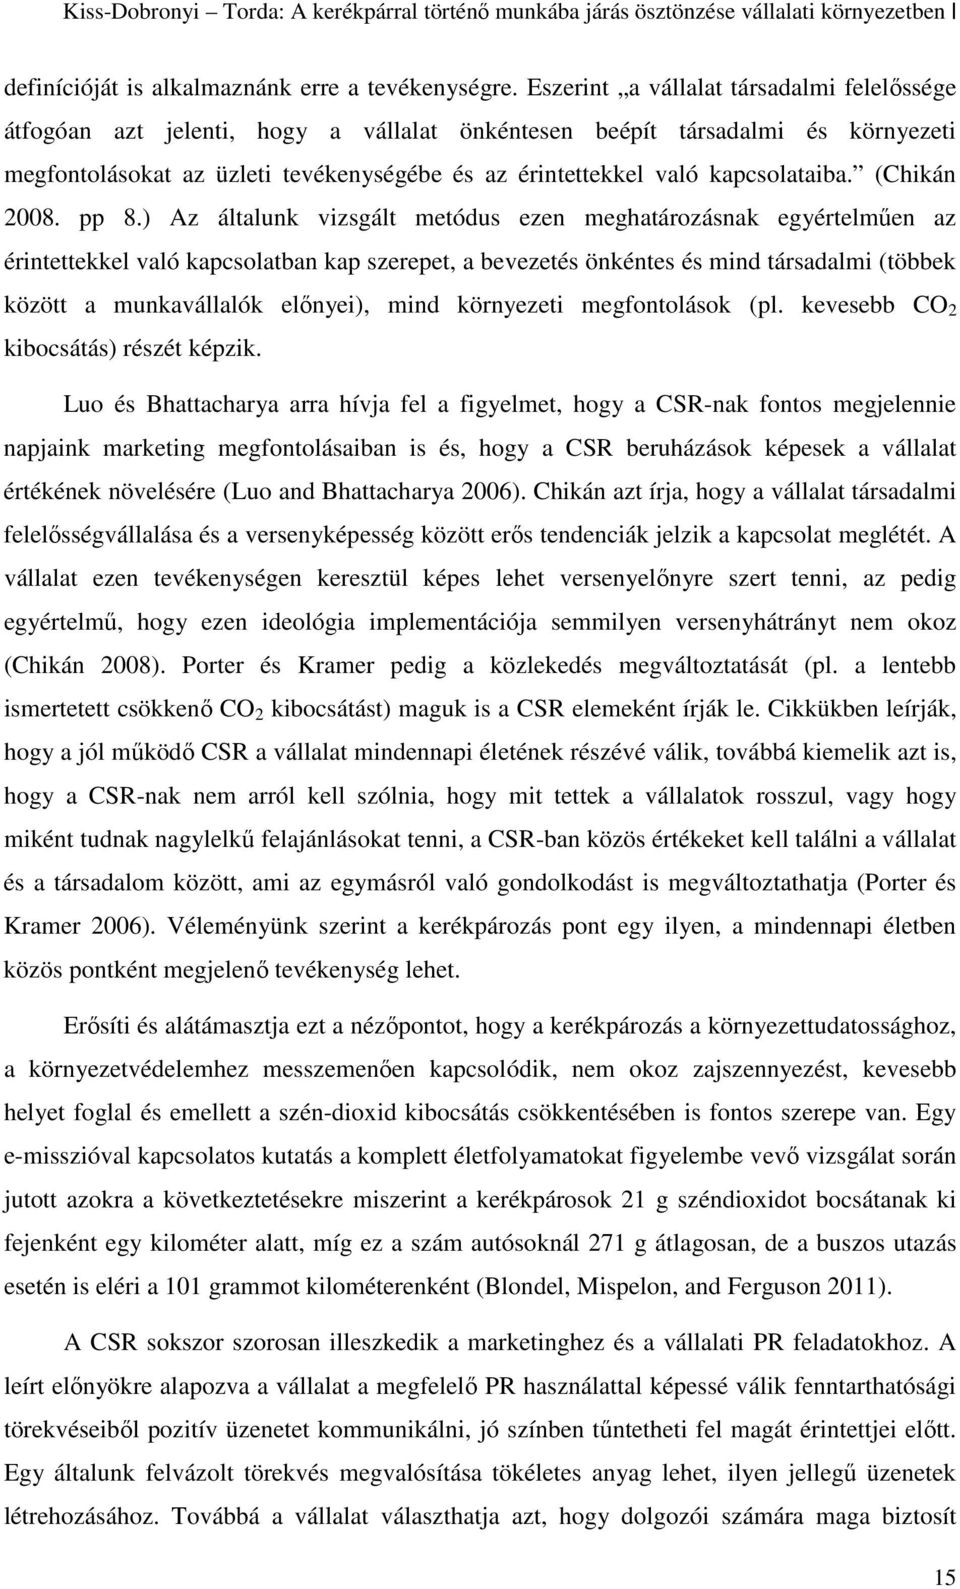 kapcsolataiba. (Chikán 2008. pp 8.